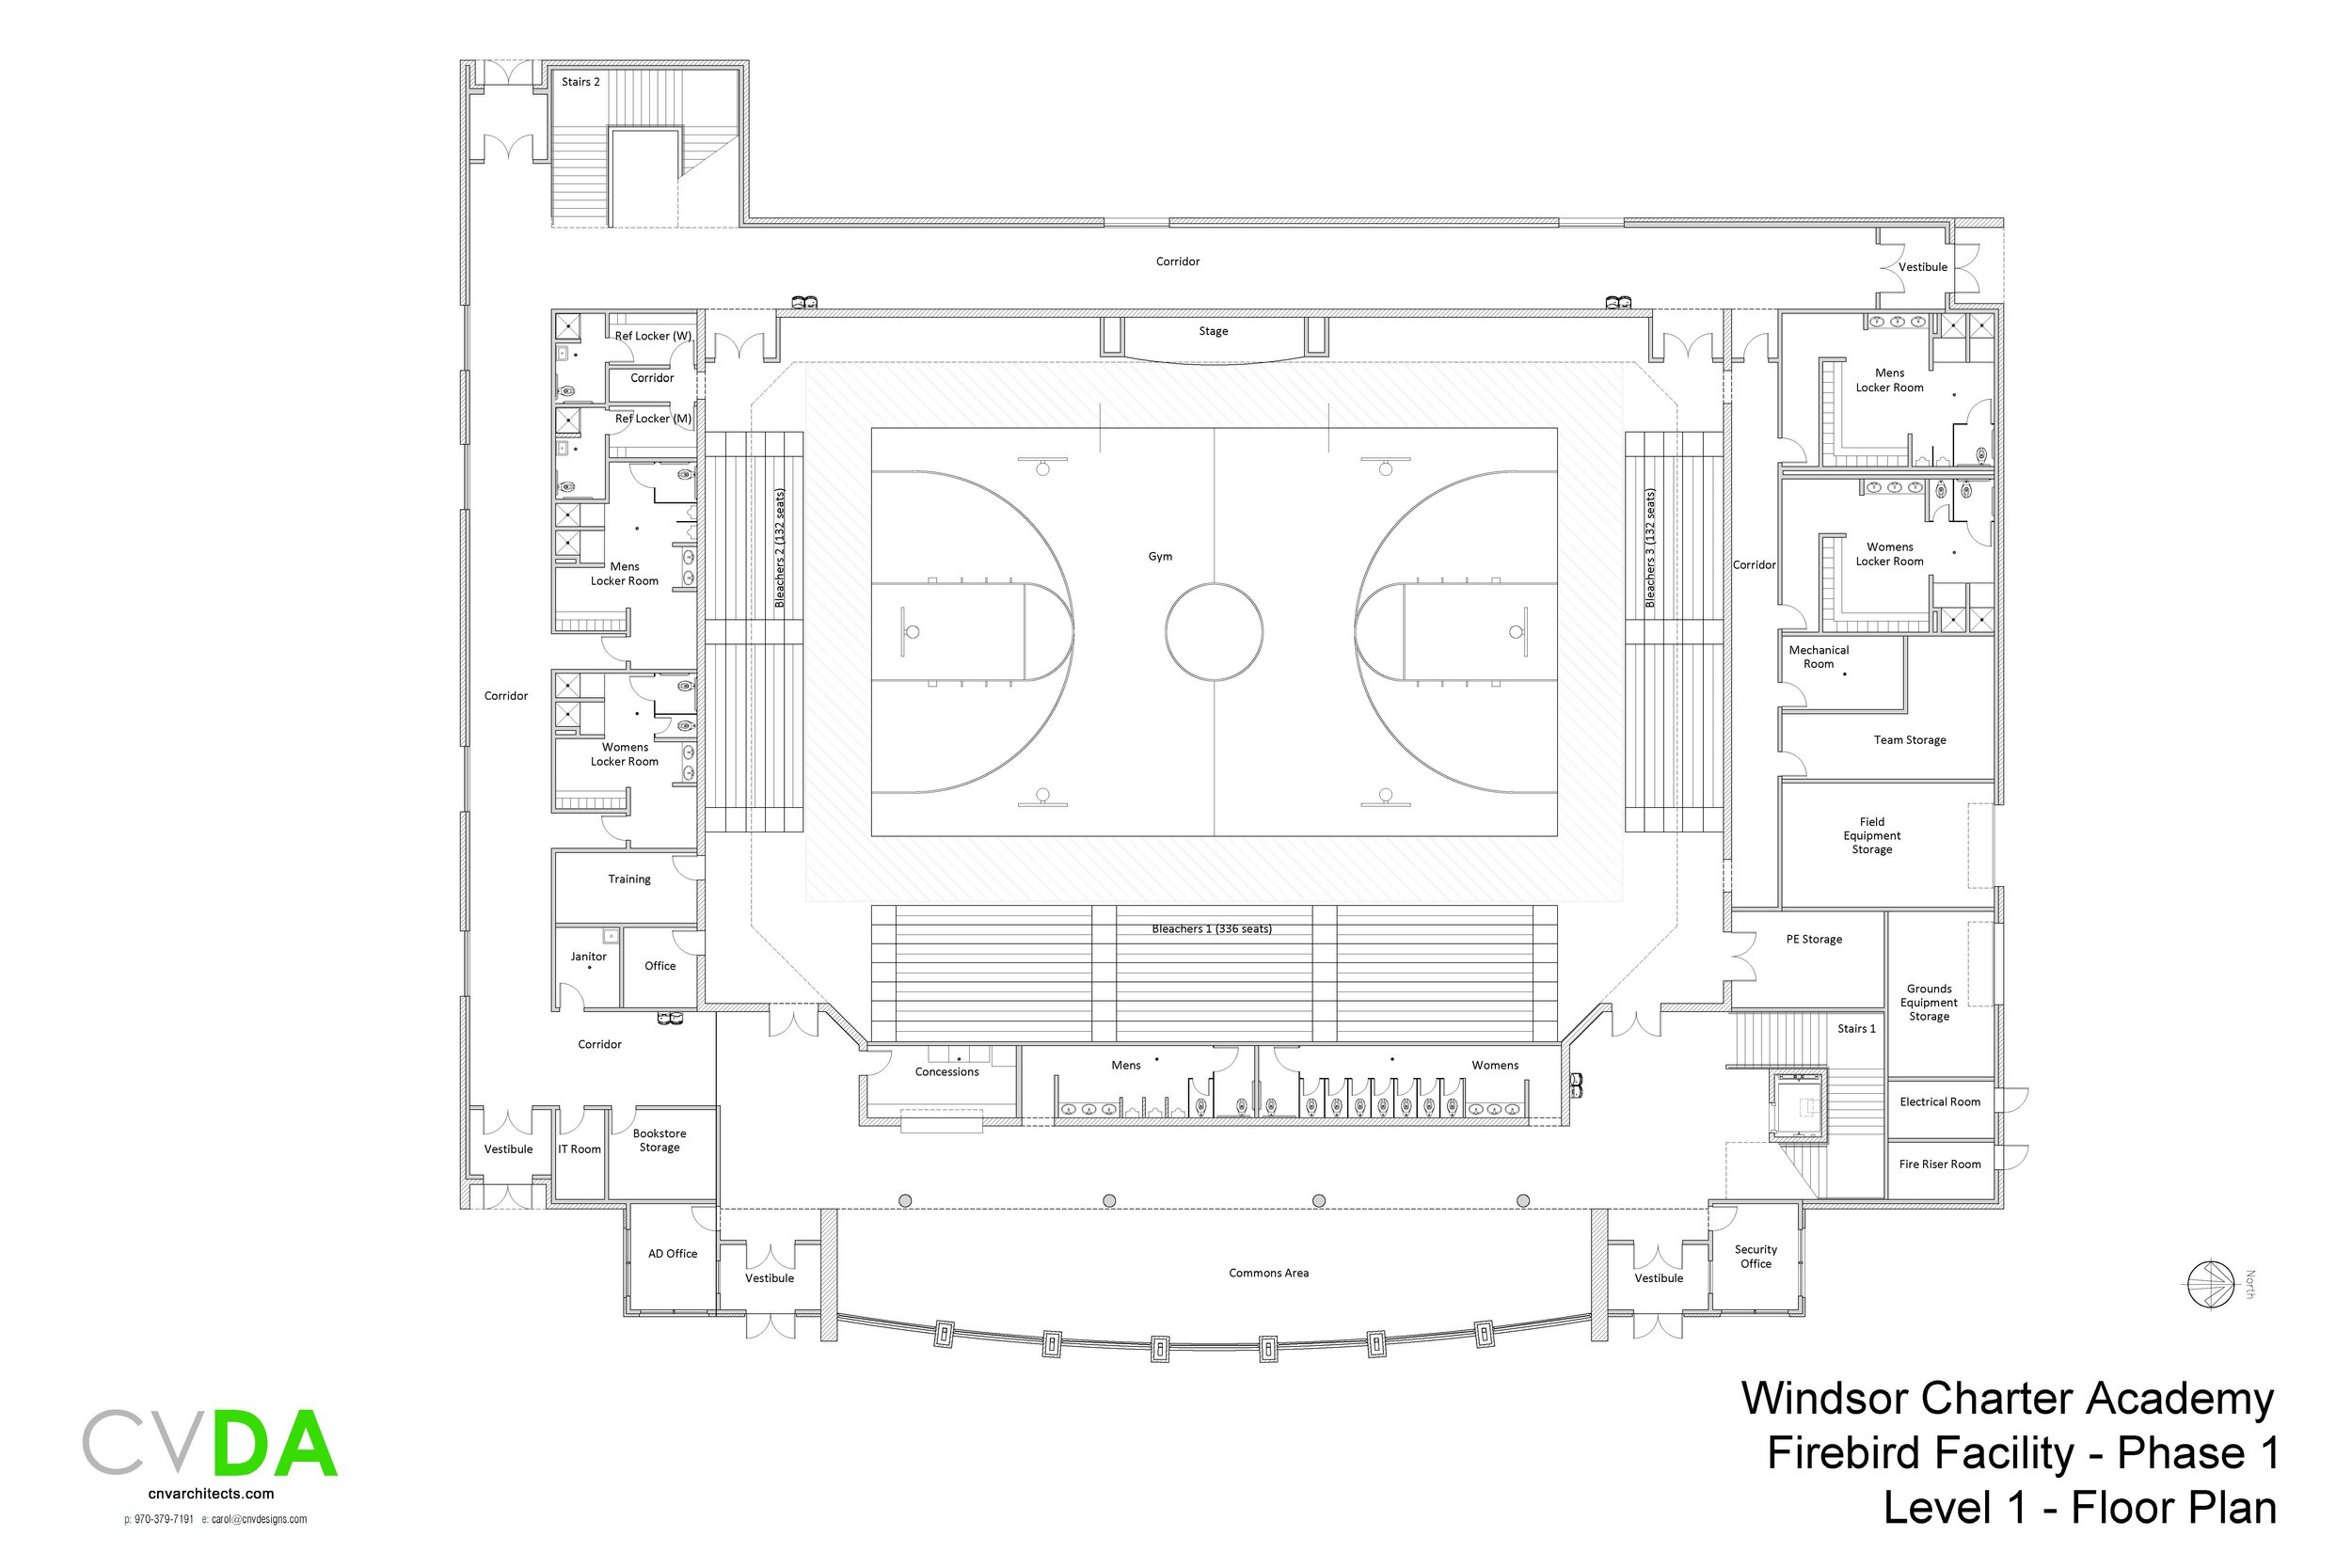 WCA Firebird Facility - Phase 1 - Floor Plans (1) (2)_Page_1.jpg